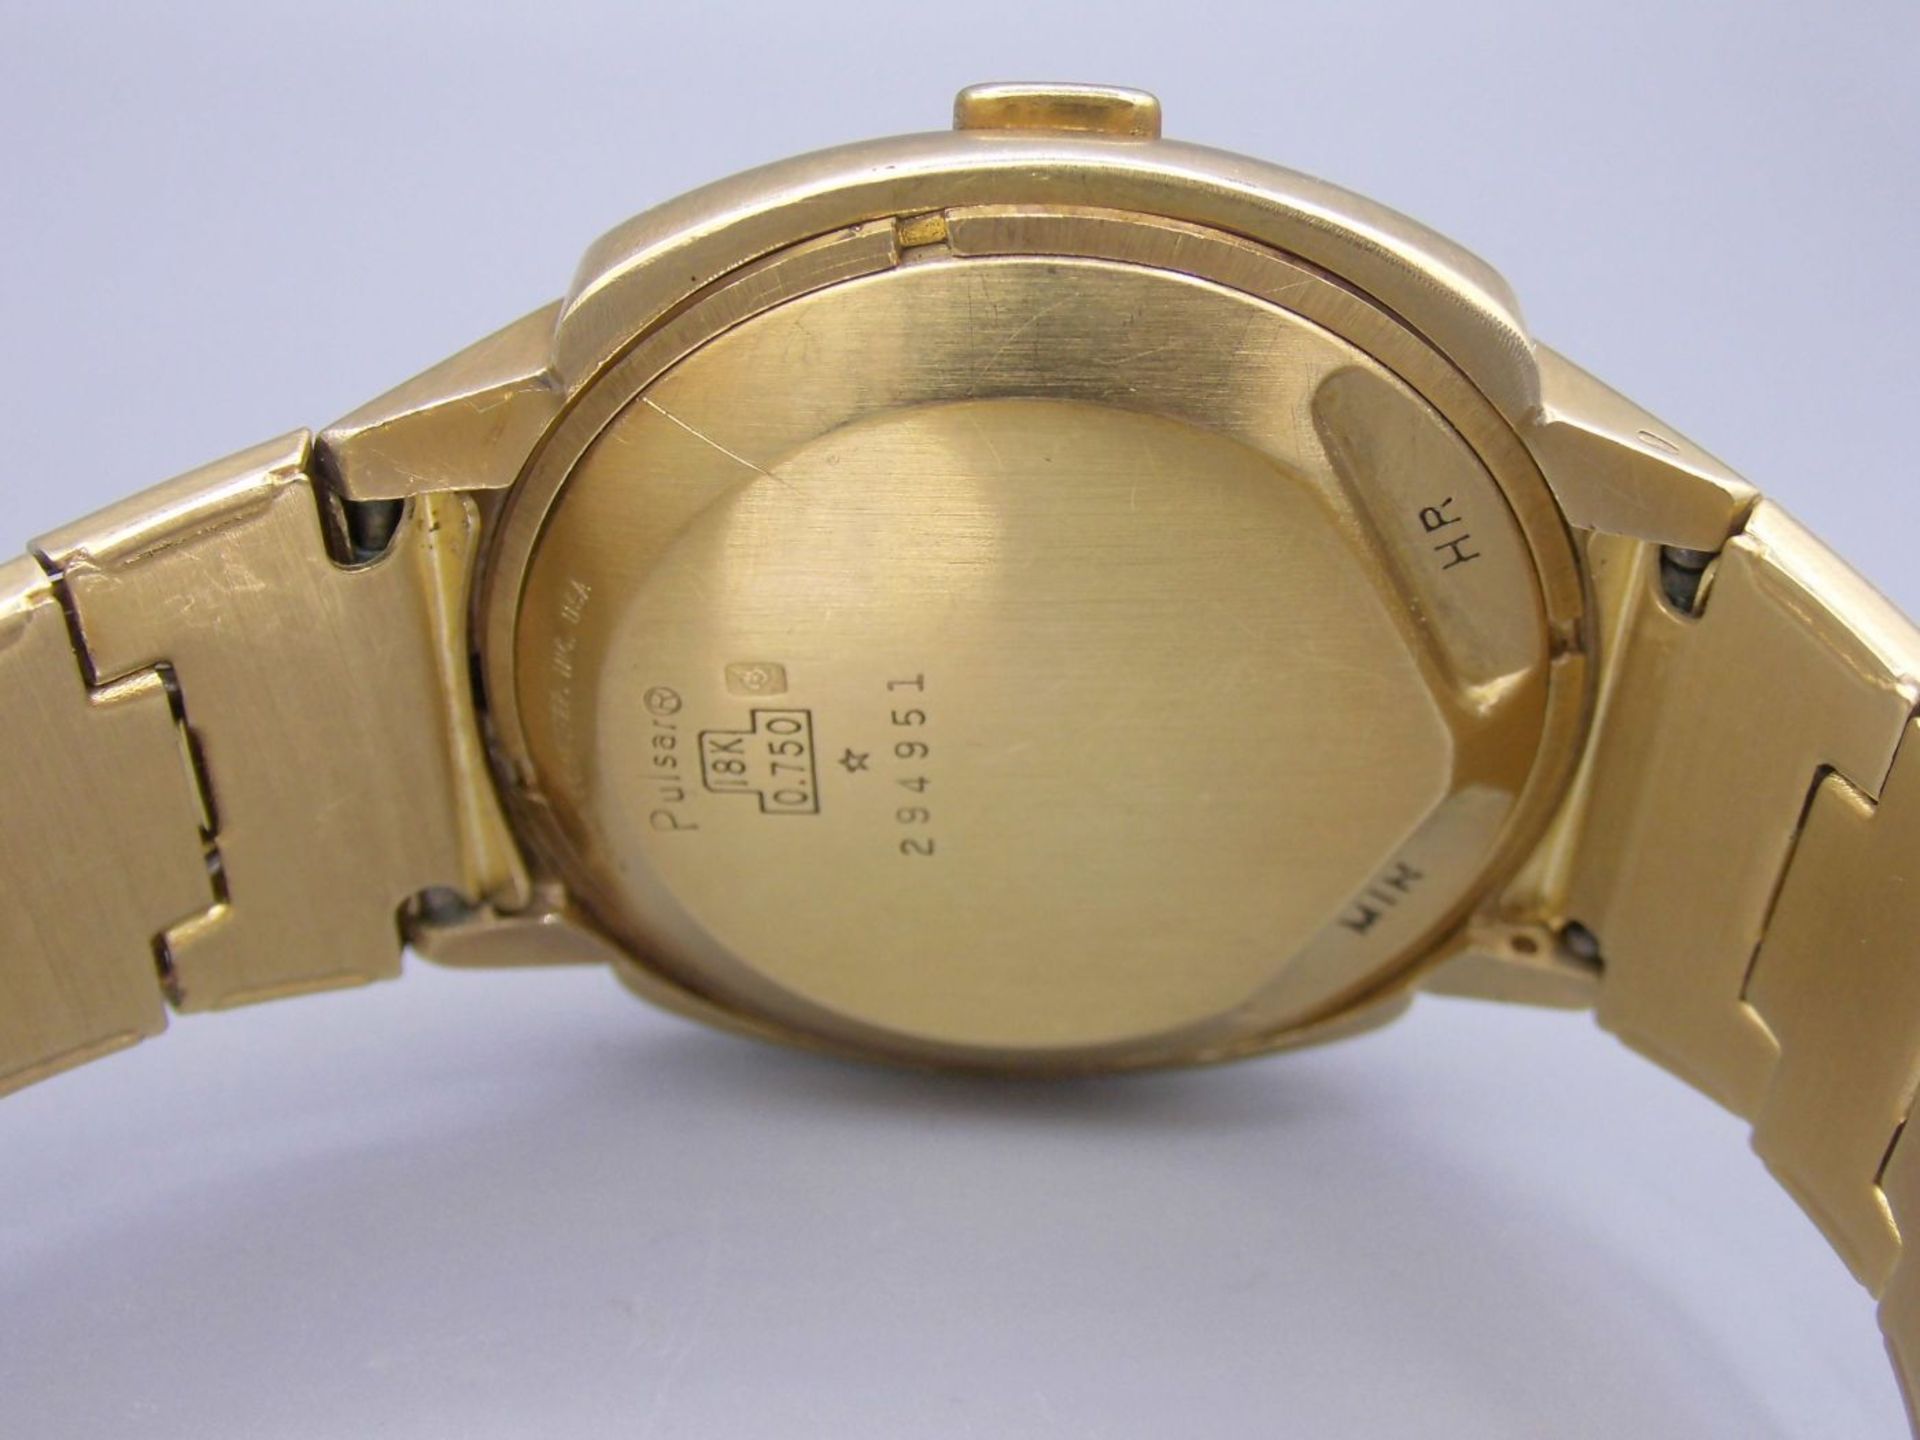 GOLDENE ARMBANDUHR / DIGITALUHR : Pulsar P3 "Date Command" / digital watch, 1970er Jahre, Gehäuse - Bild 6 aus 7